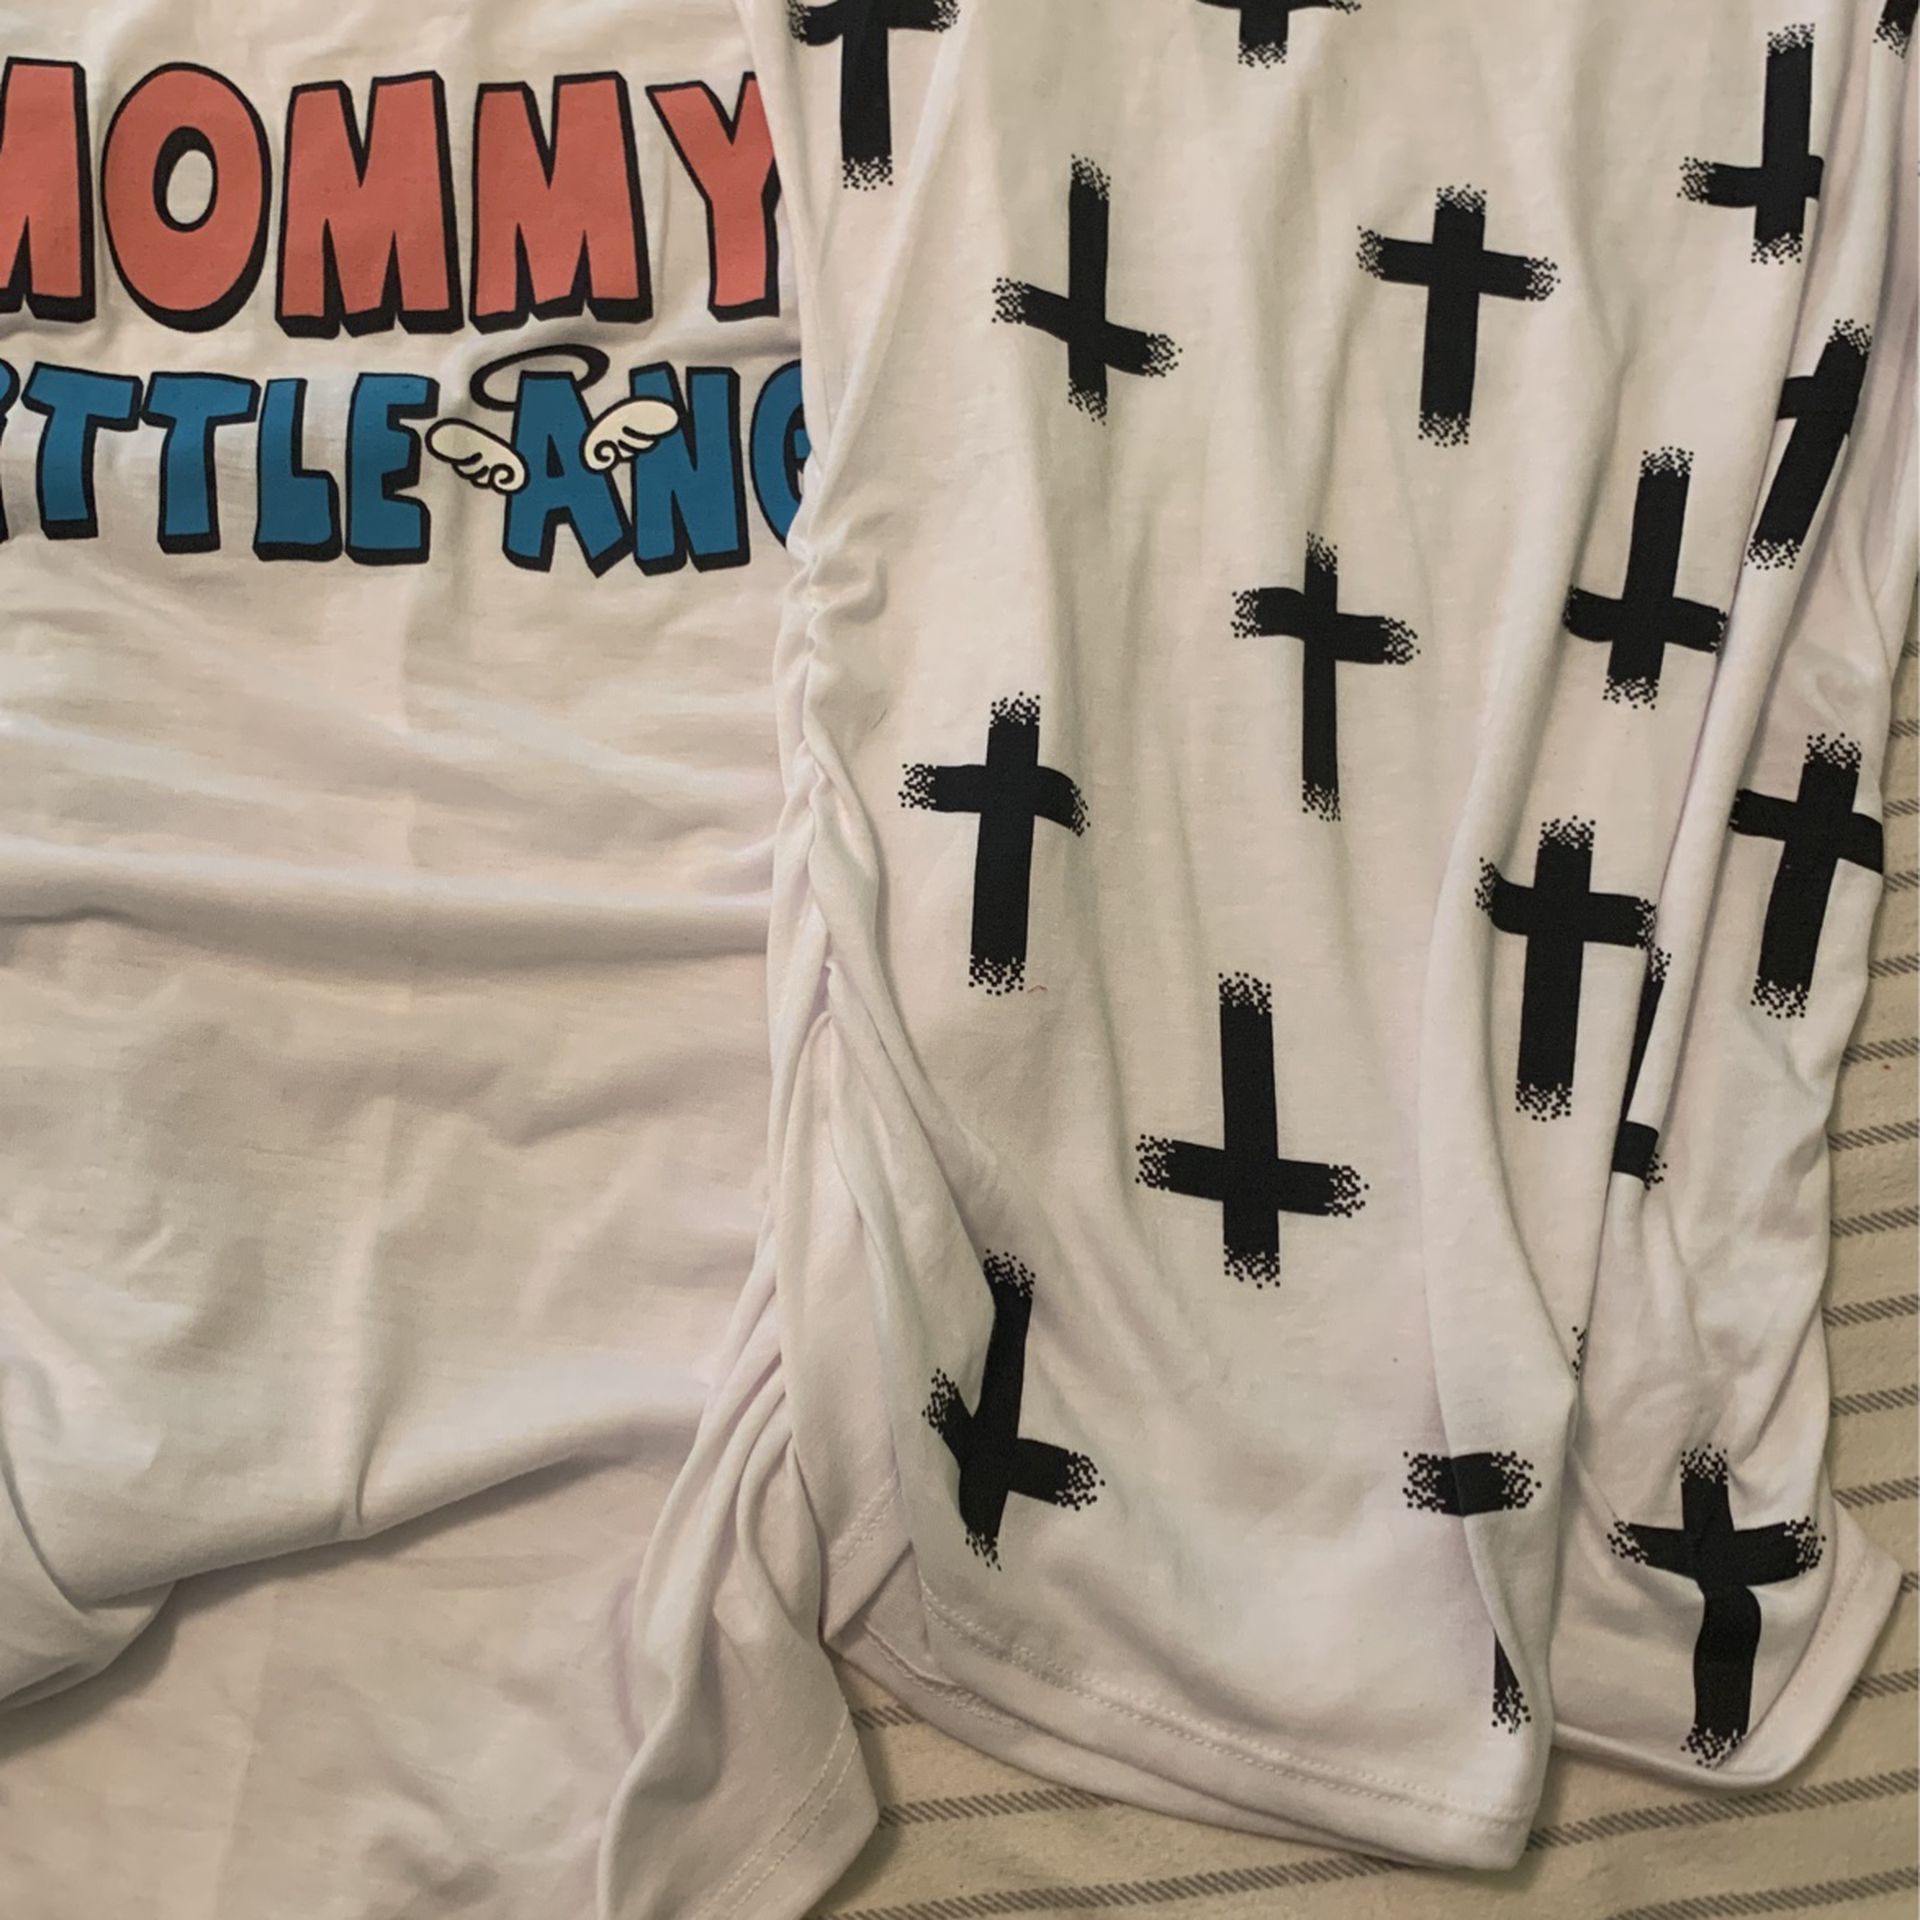 Maternity Shirts S,m, L $6 Each 